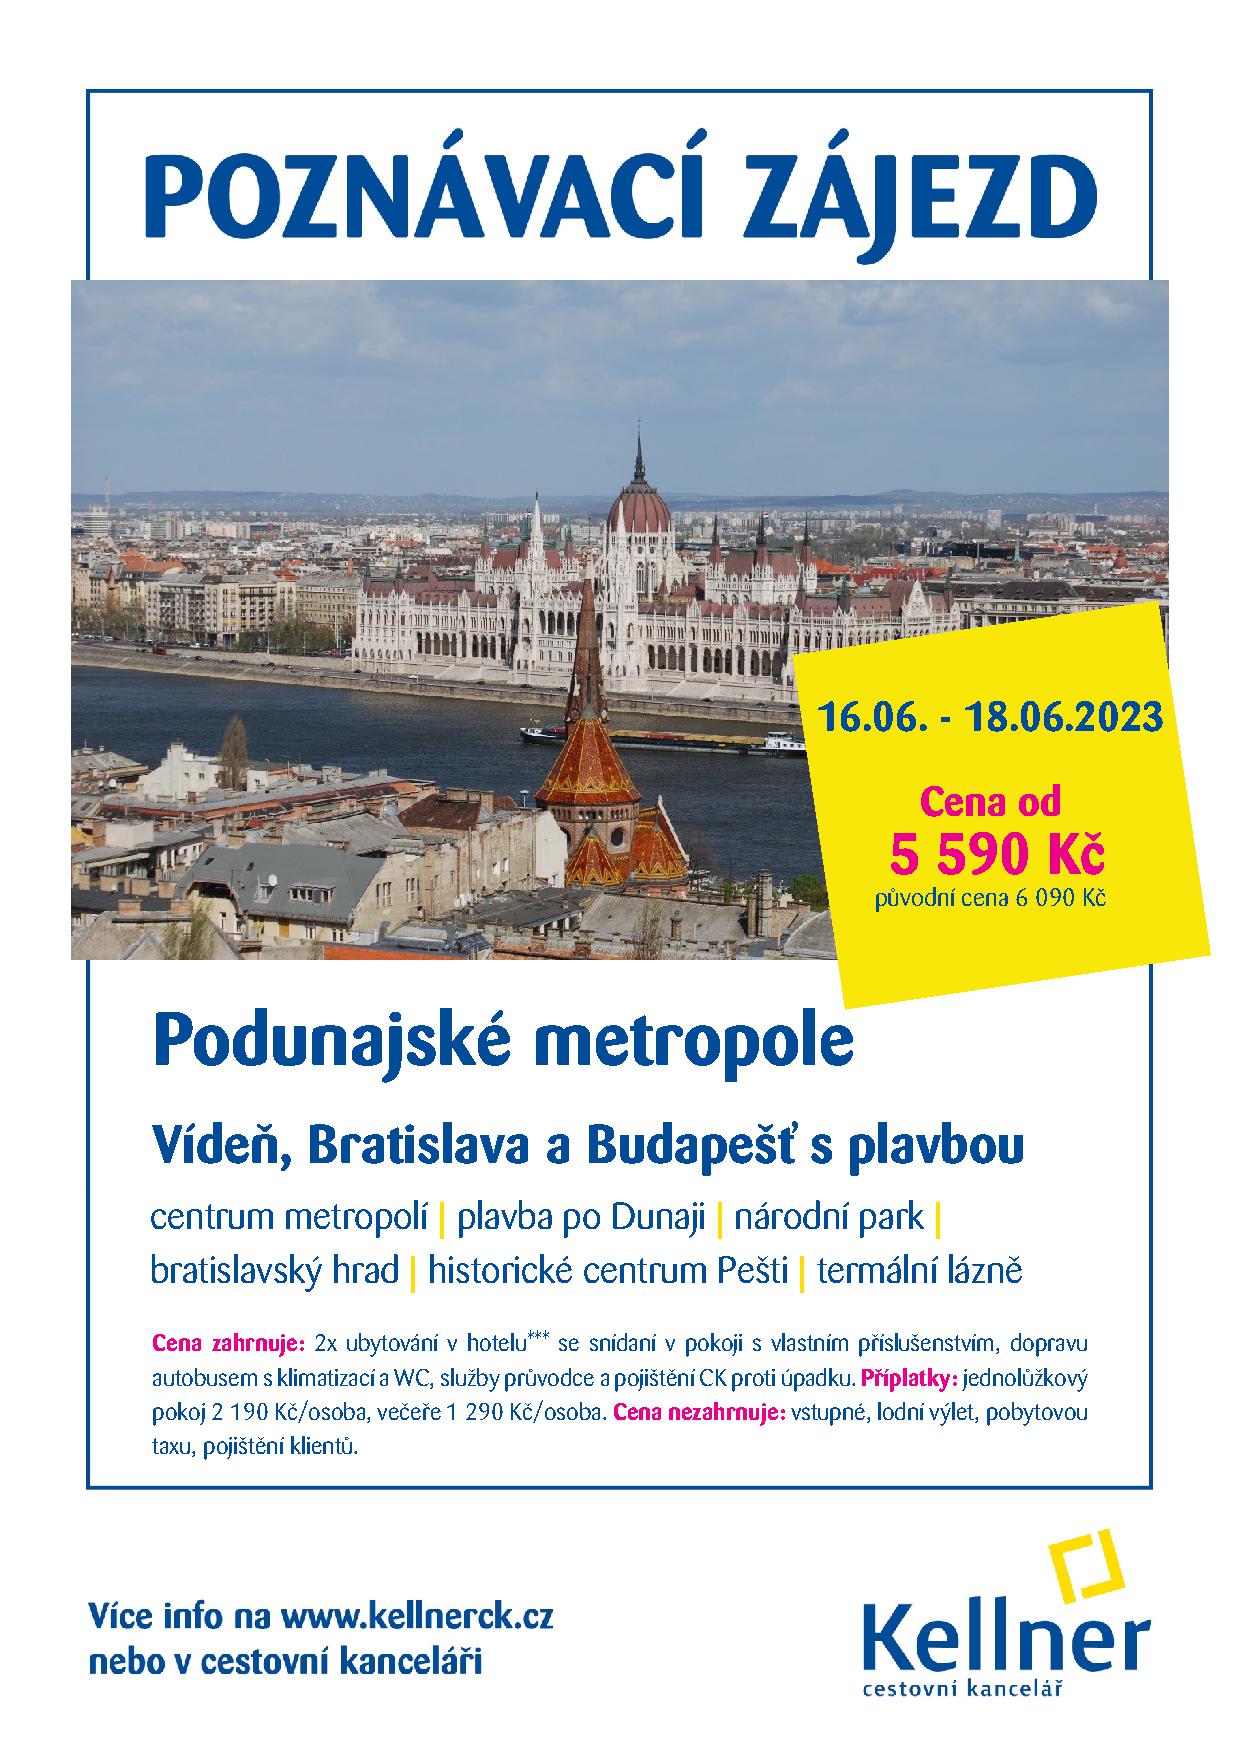 9. Podunajské metropole